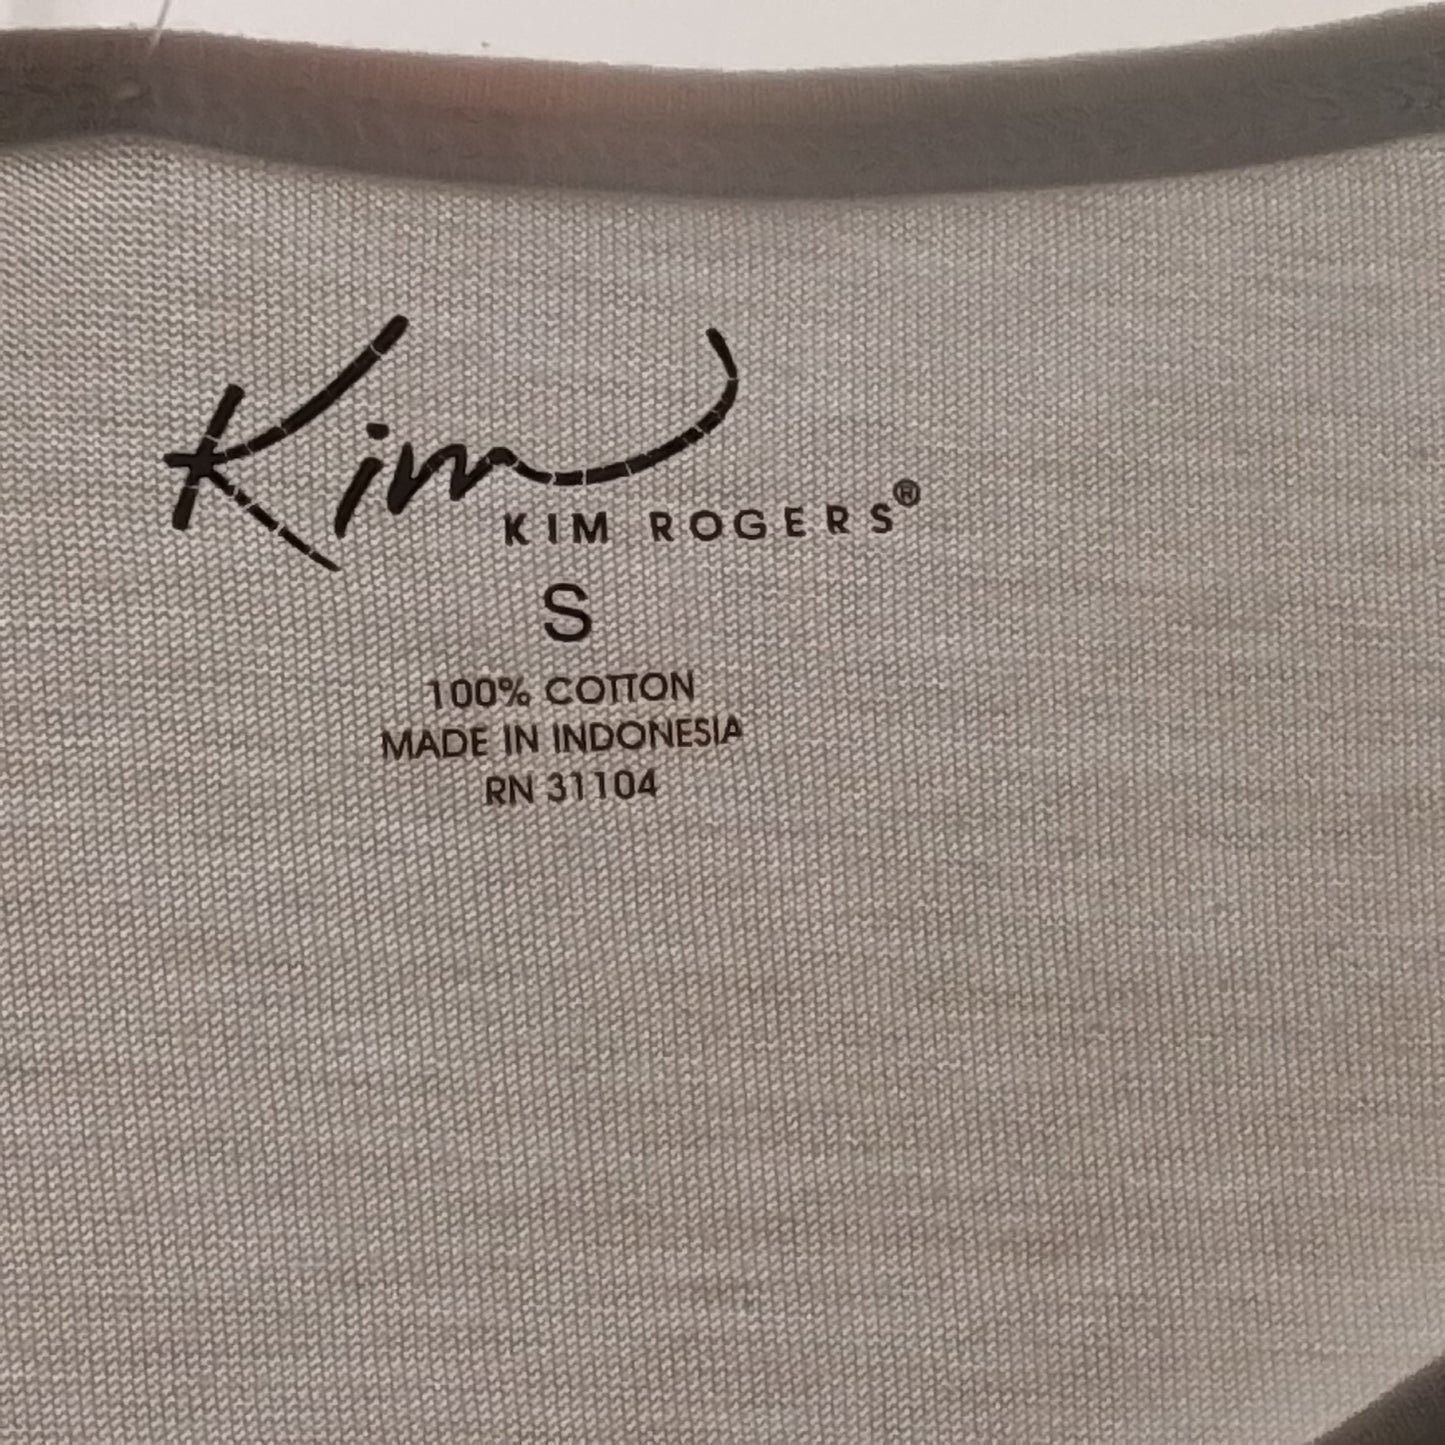 Kim Rogers White Long Sleeve Shirt